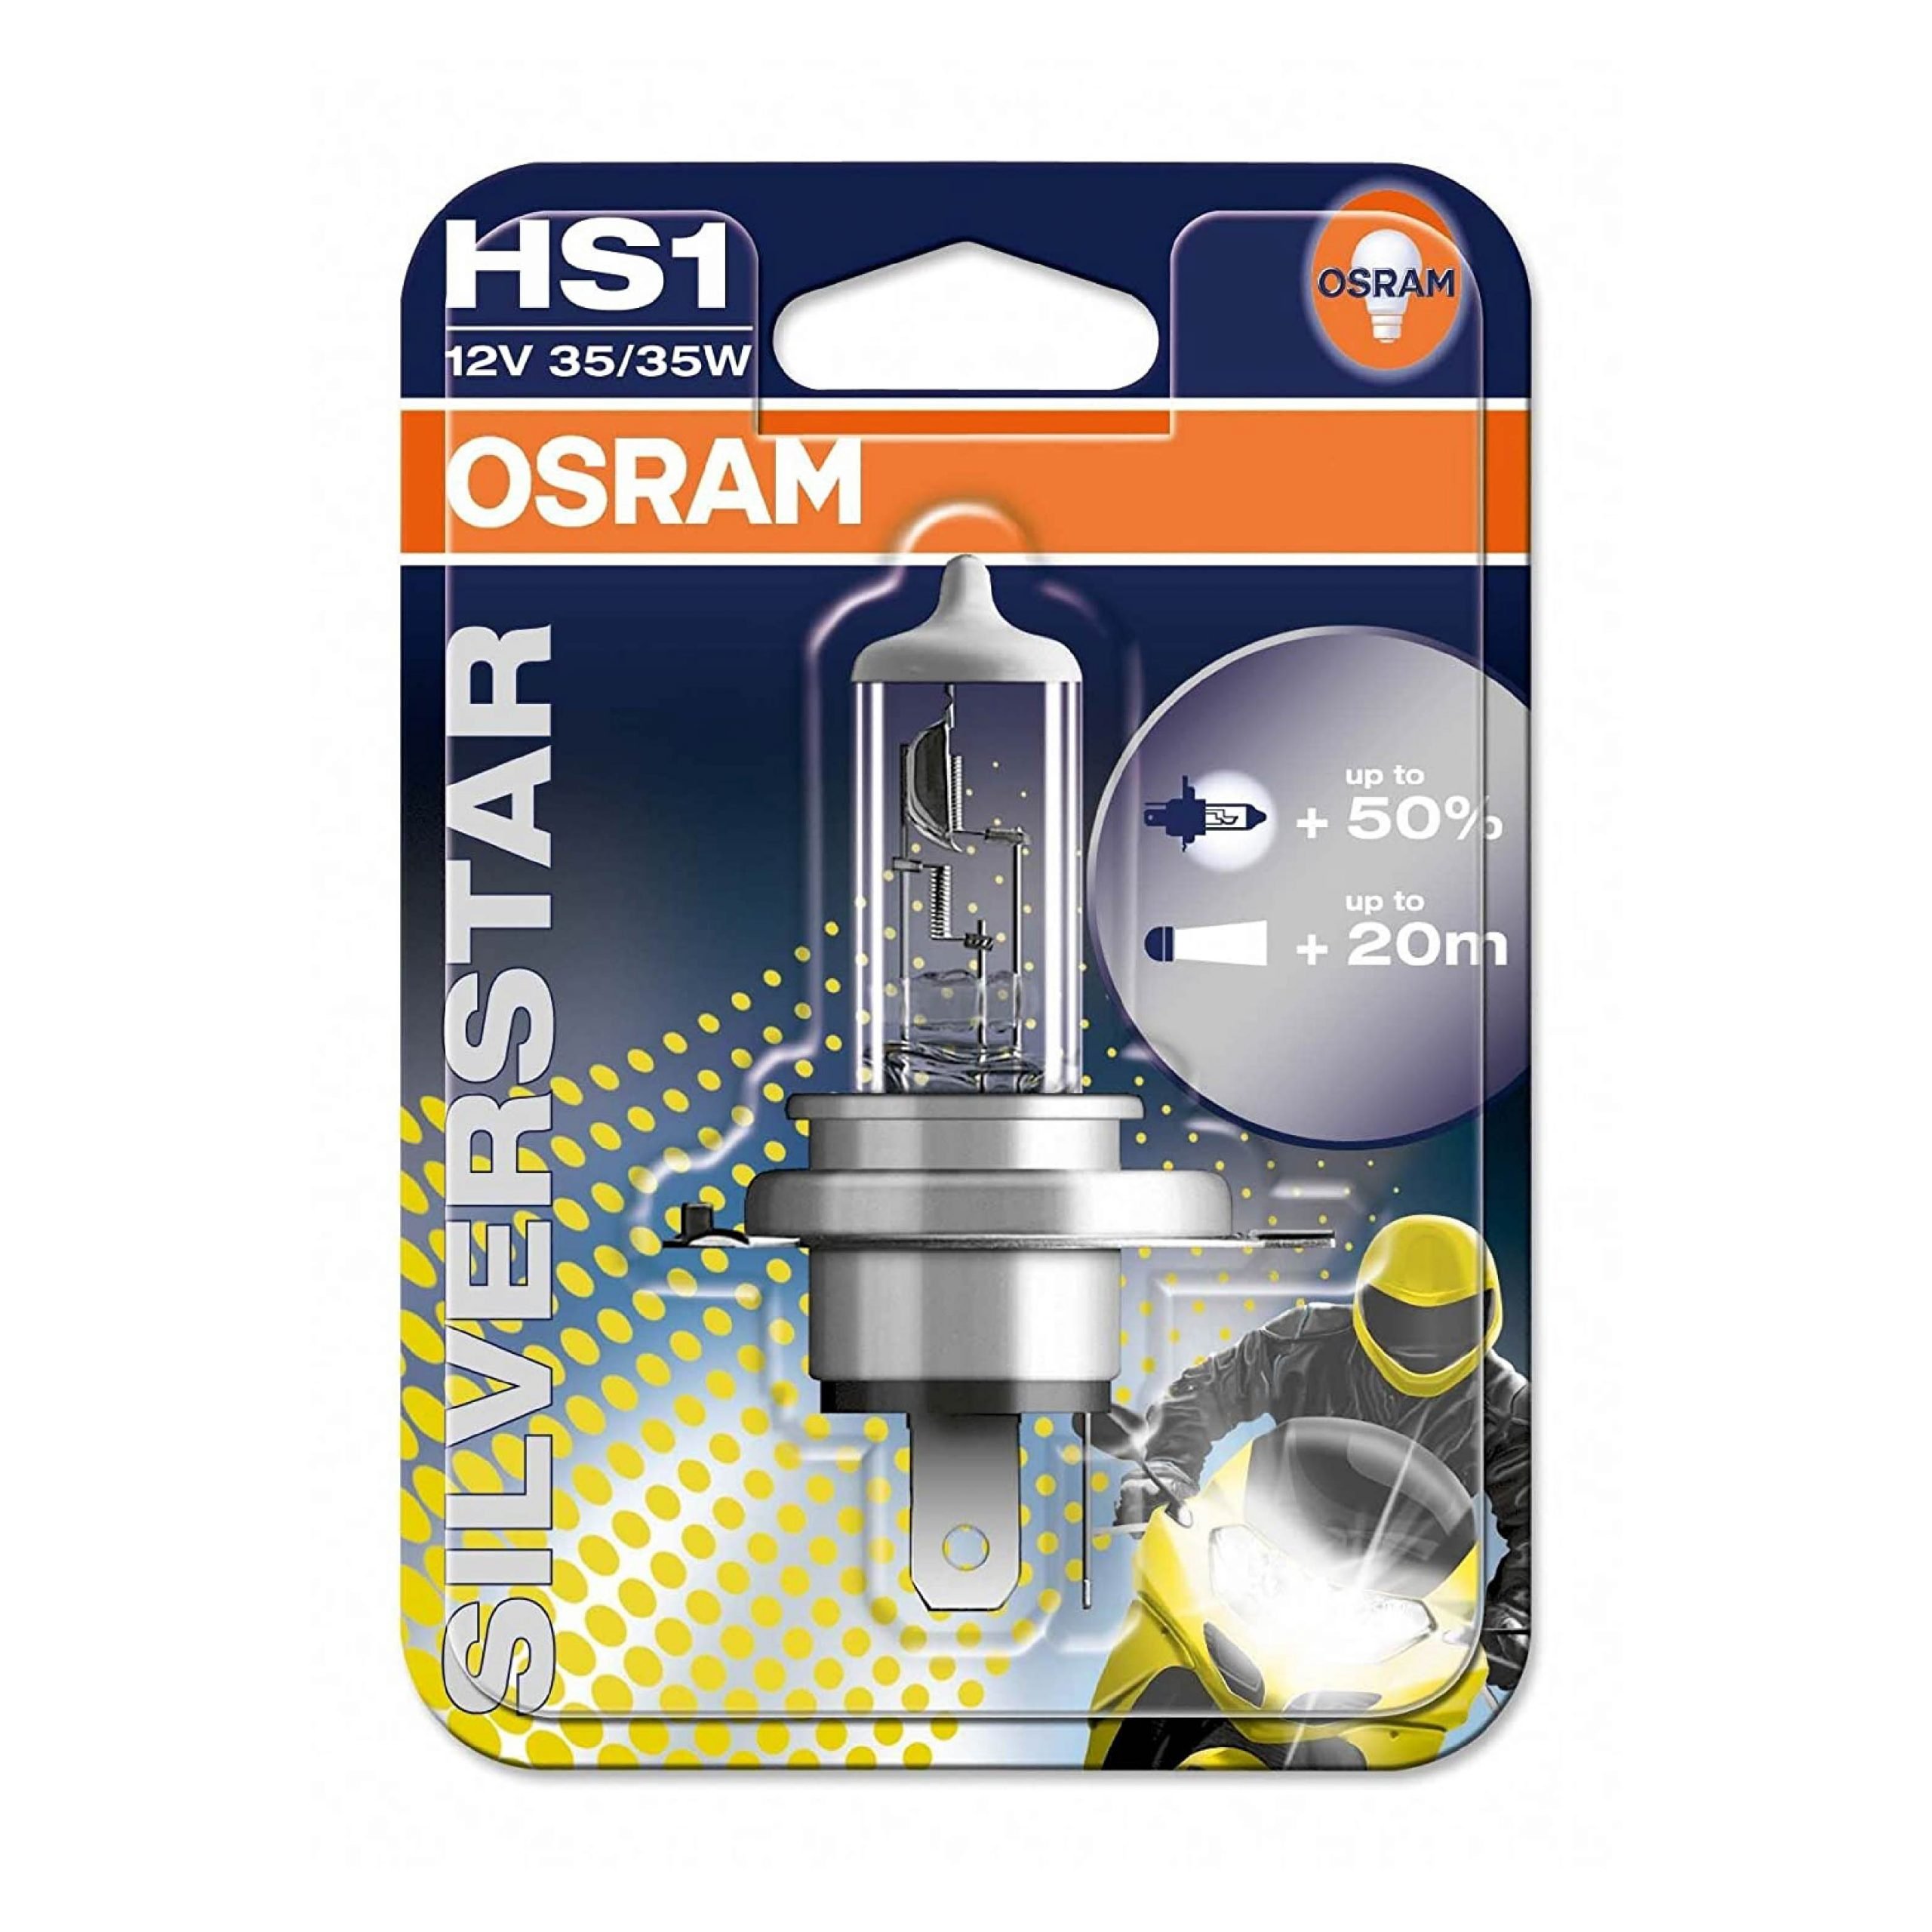 Osram Headlight Halogen Universal For Car HS1 All Season Super